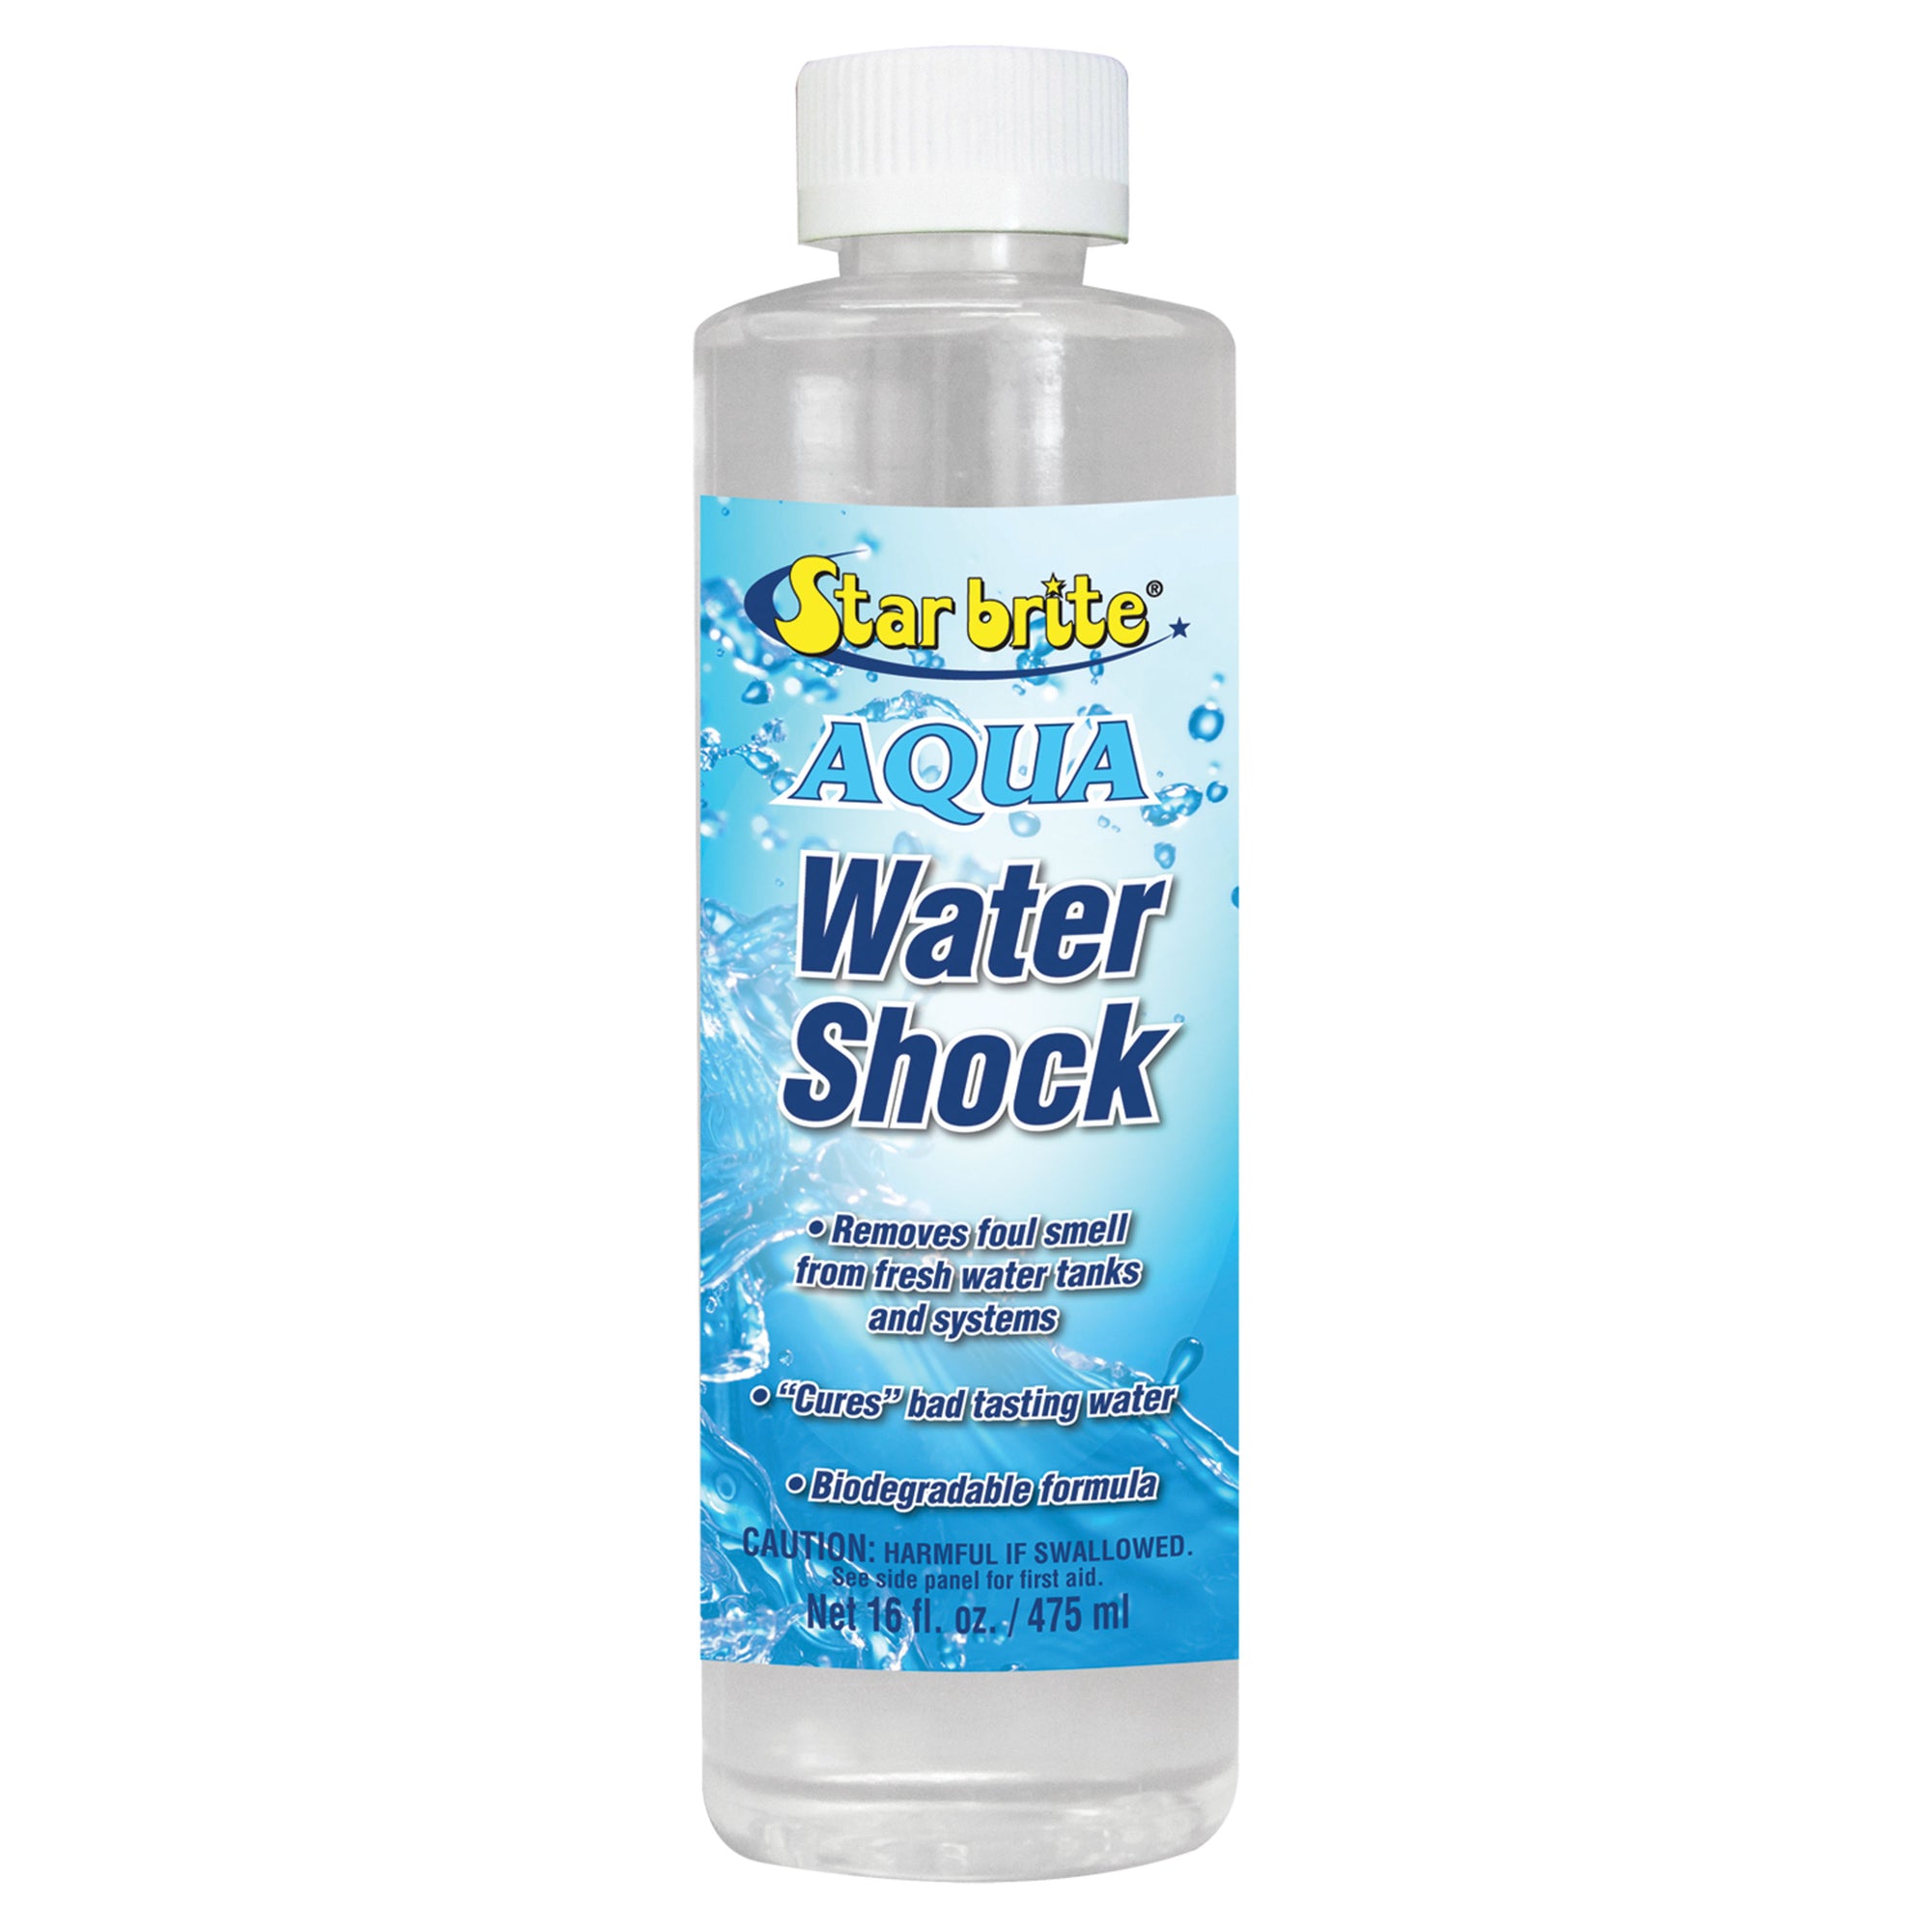 Star brite 097116 Aqua Water Shock - 16 oz